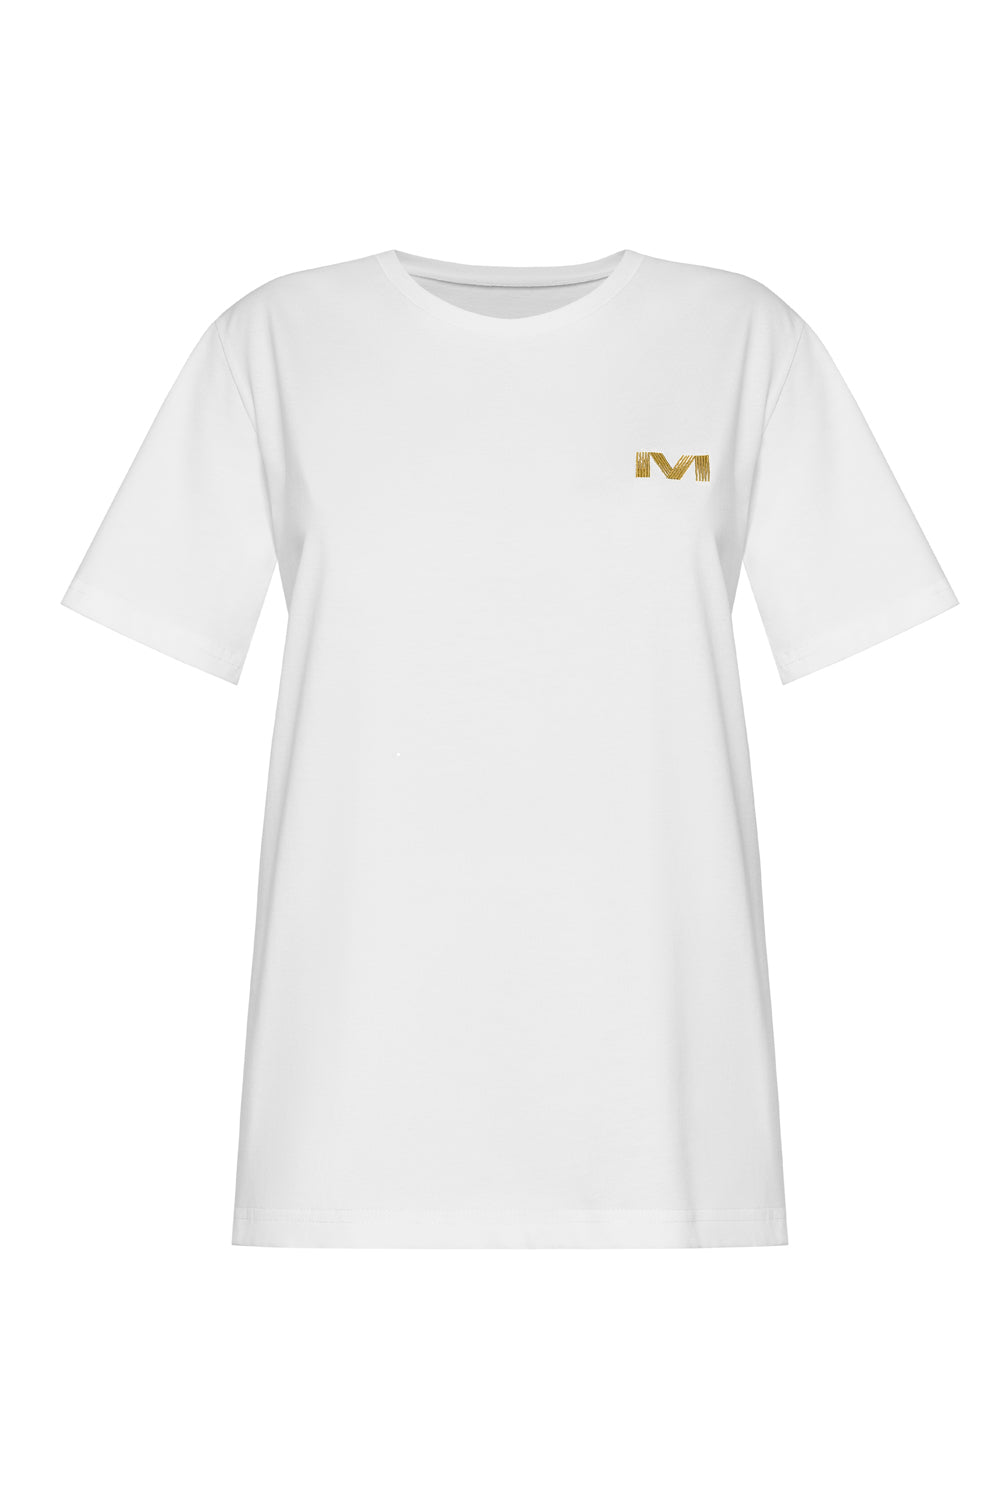 Gold Monogram T-Shirt